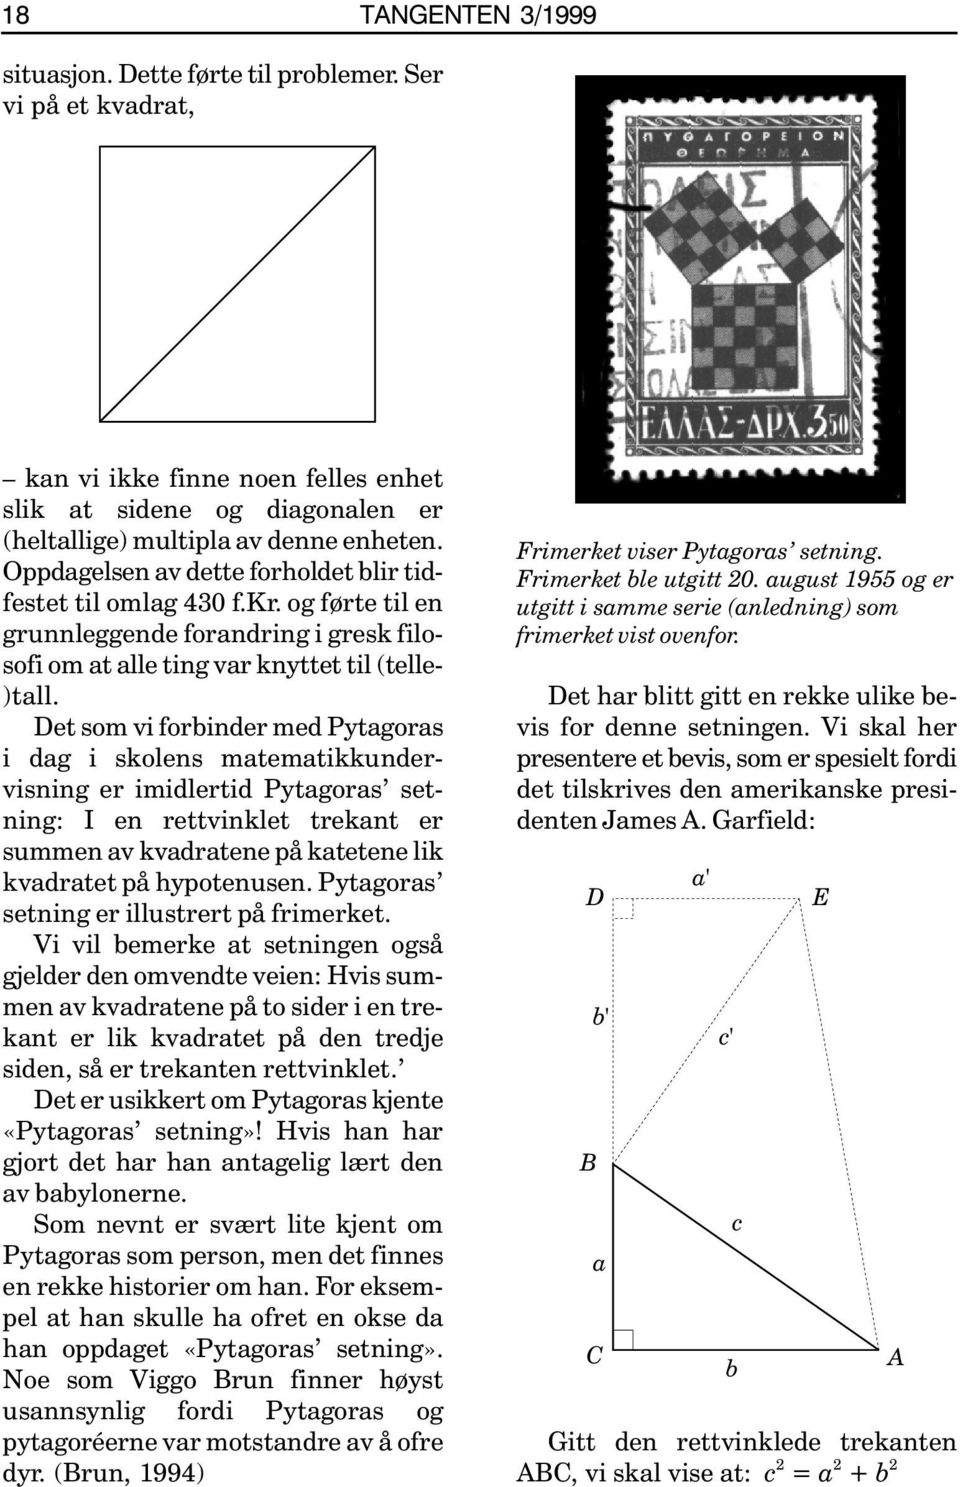 Det som vi forbinder med Pytagoras i dag i skolens matematikkundervisning er imidlertid Pytagoras setning: I en rettvinklet trekant er summen av kvadratene på katetene lik kvadratet på hypotenusen.